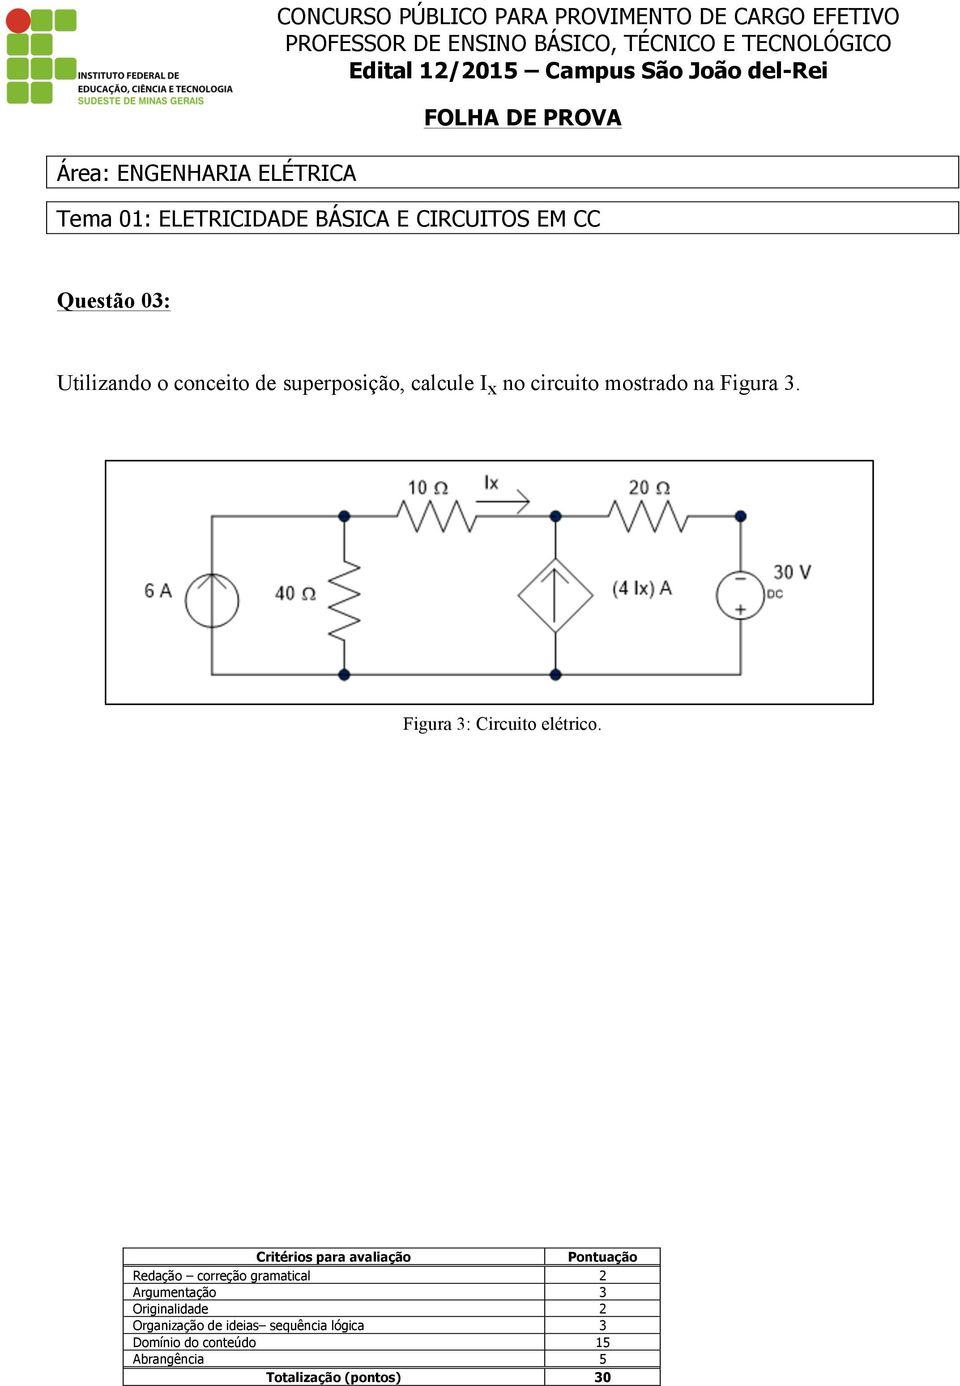 Figura 3. Figura 3: Circuito elétrico.